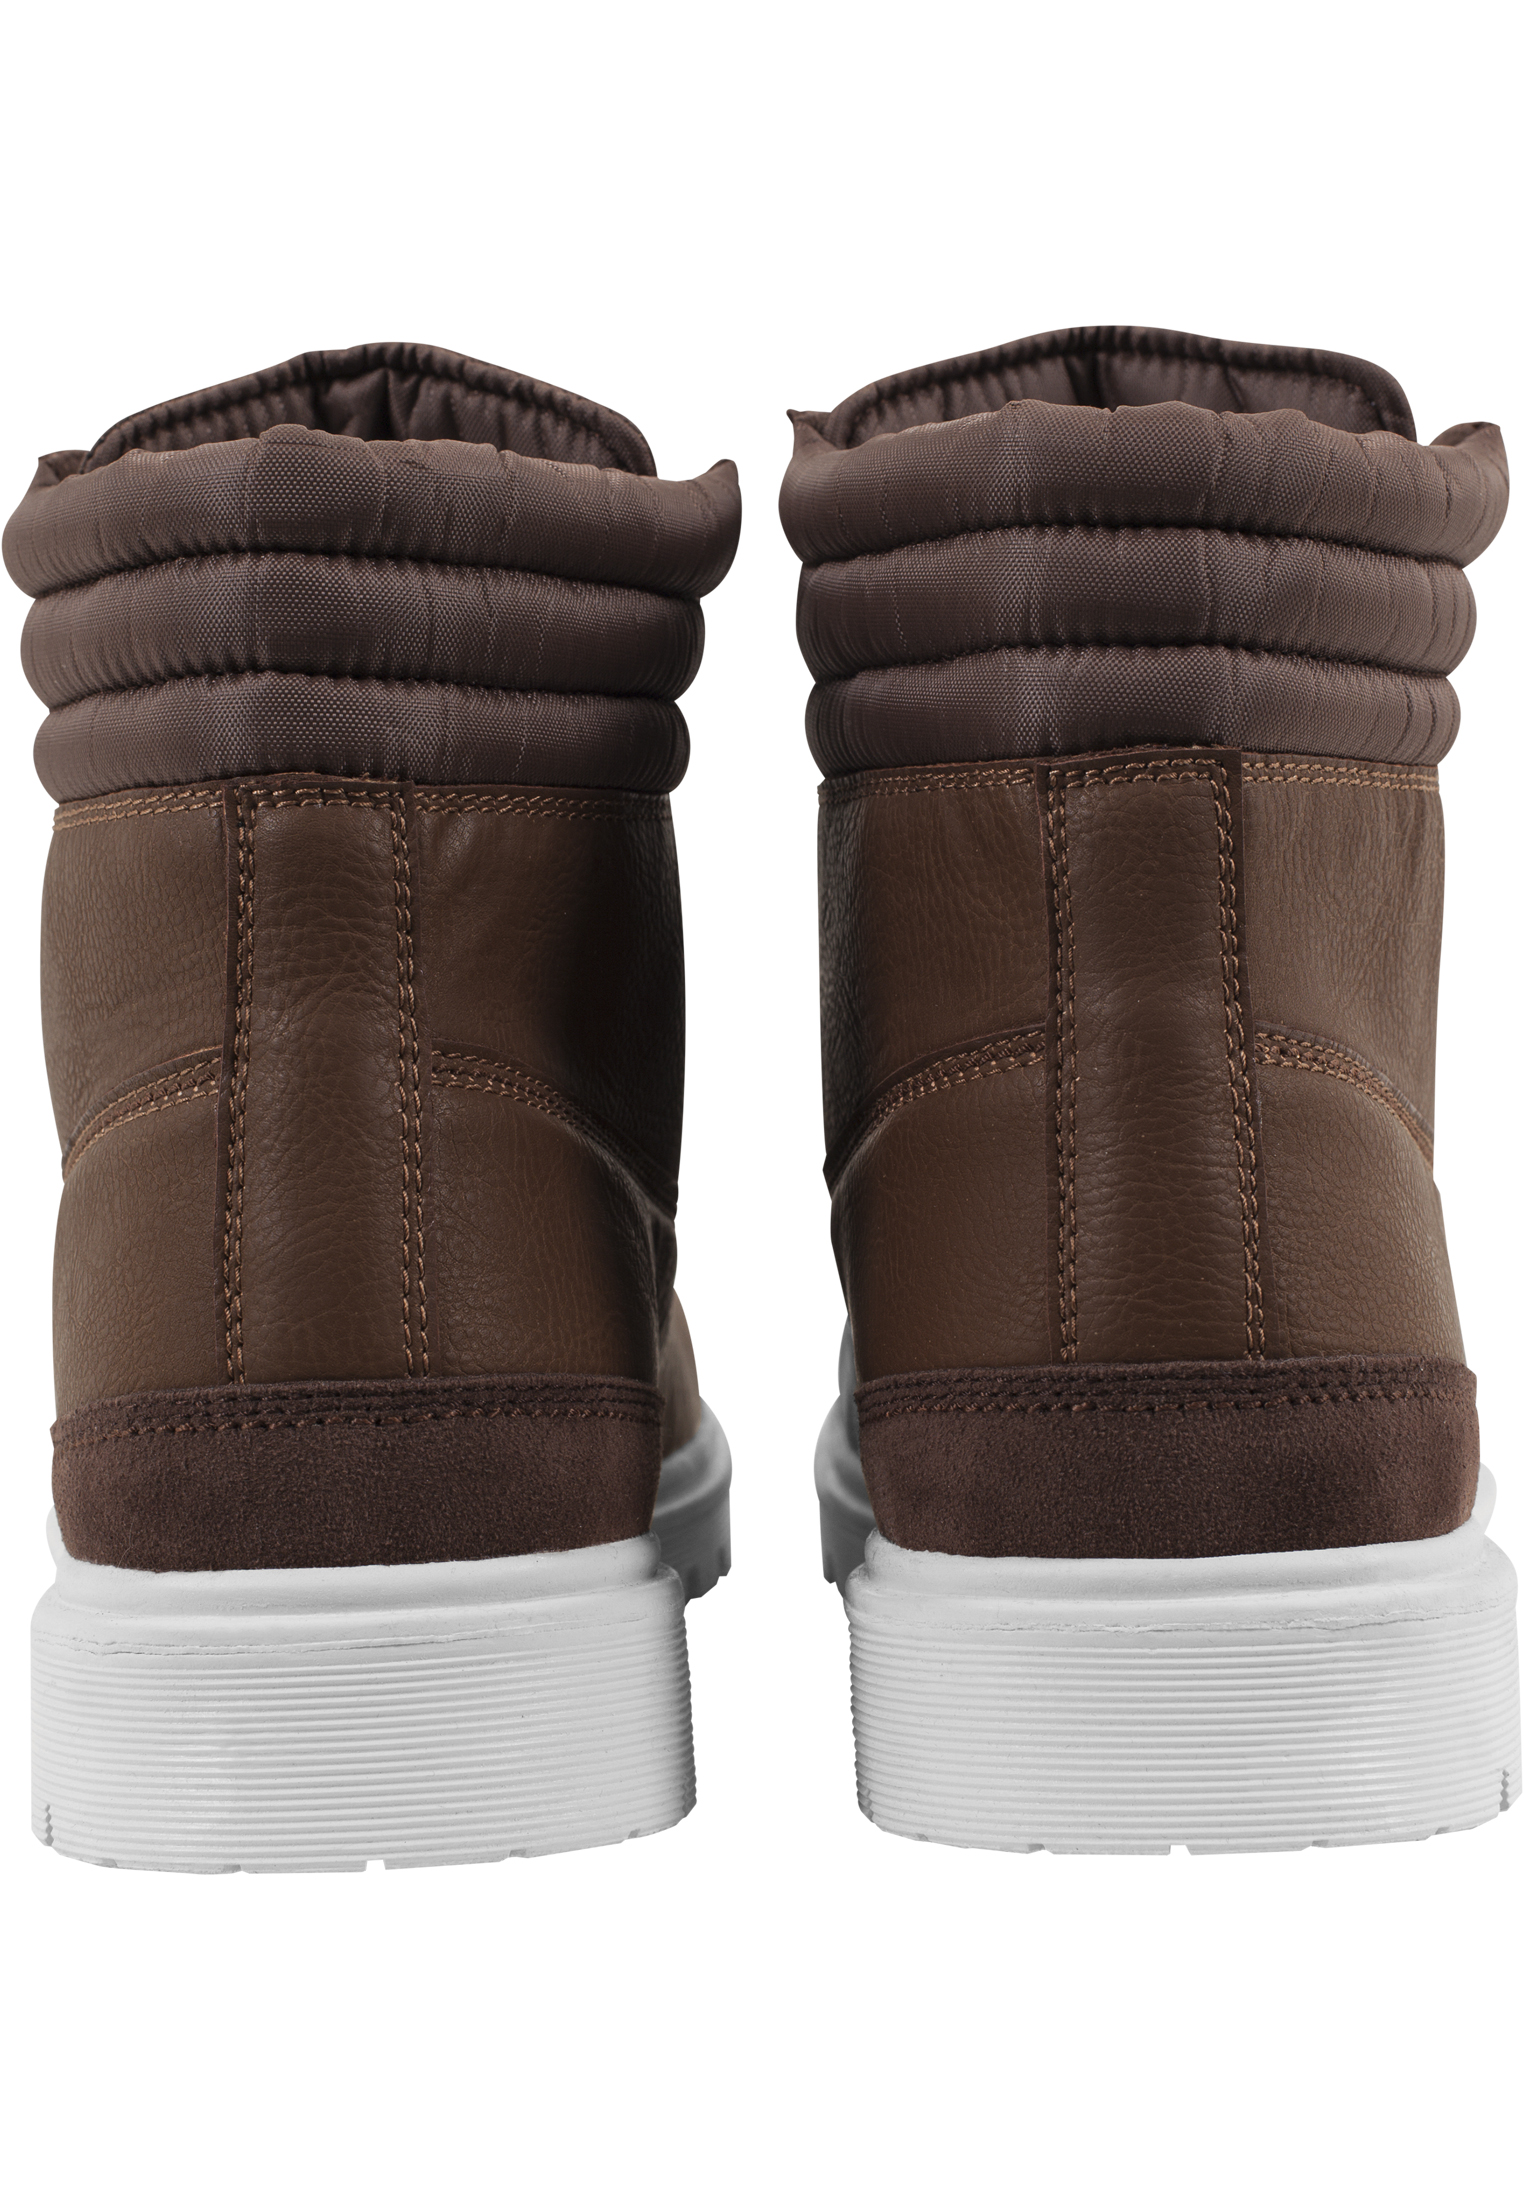 Schuhe Winter Boots in Farbe brown/darkbrown